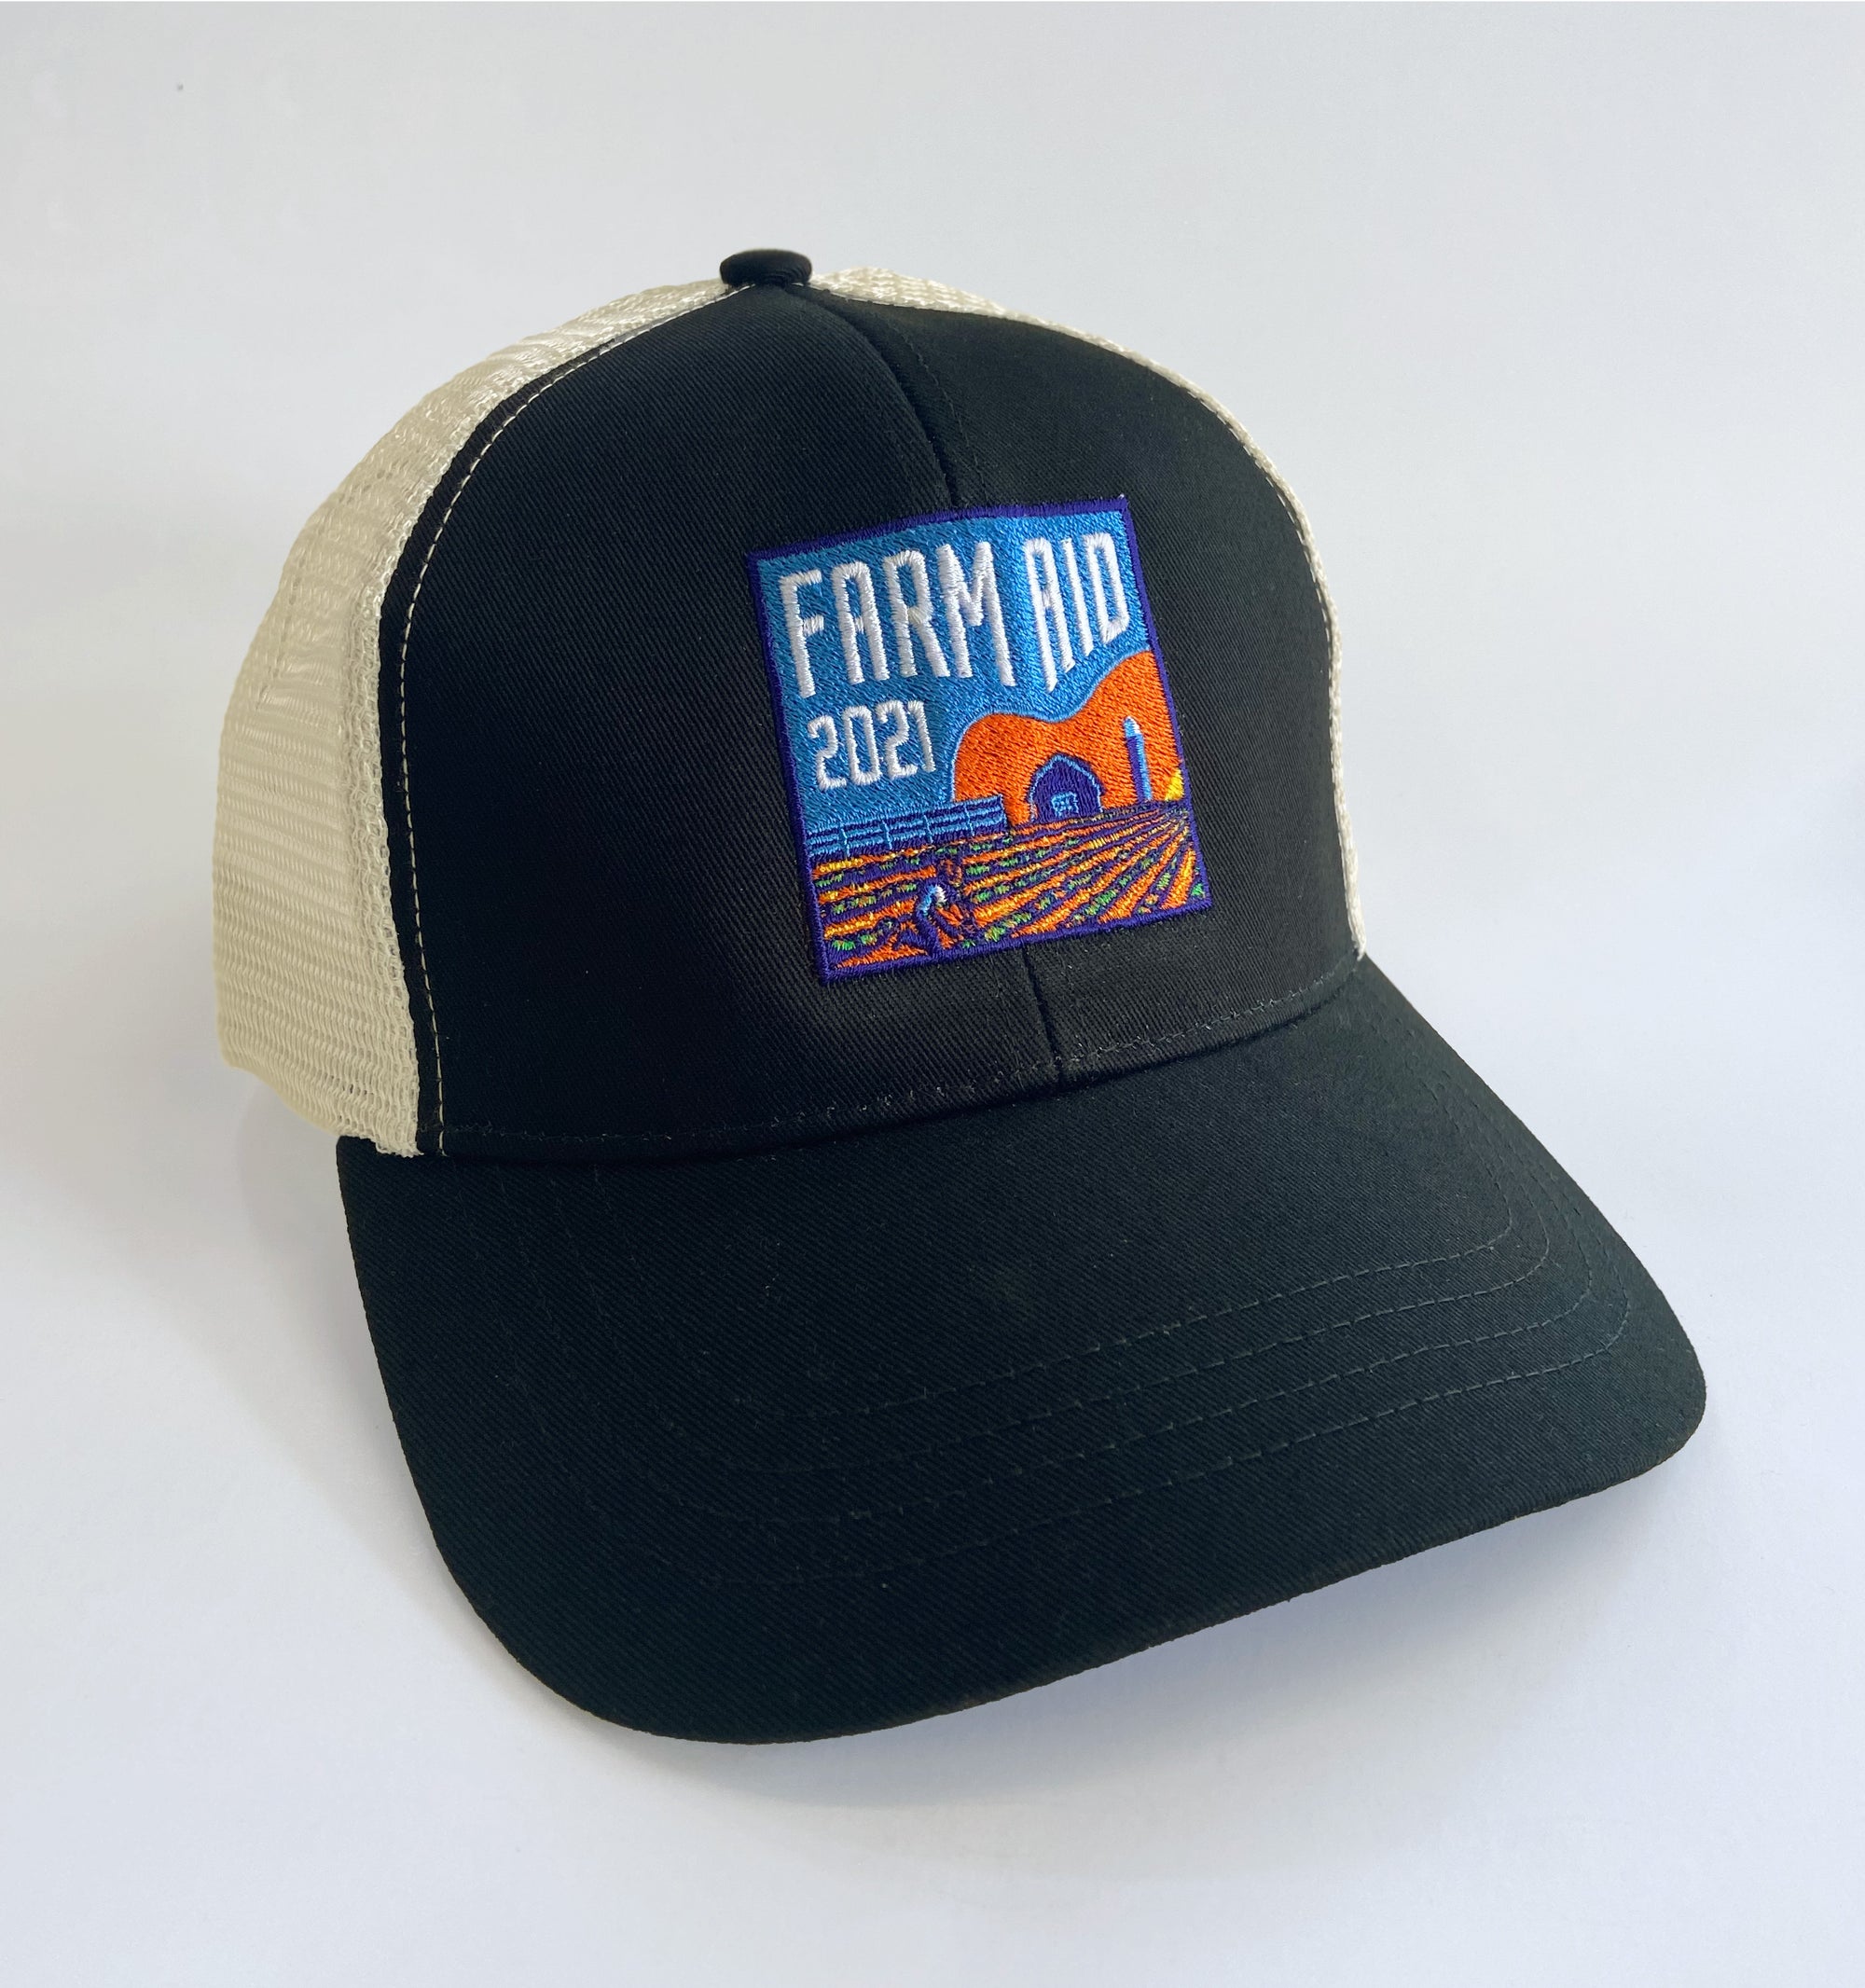 Farm Aid 2021 Concert Logo Trucker Hat - Black on Natural